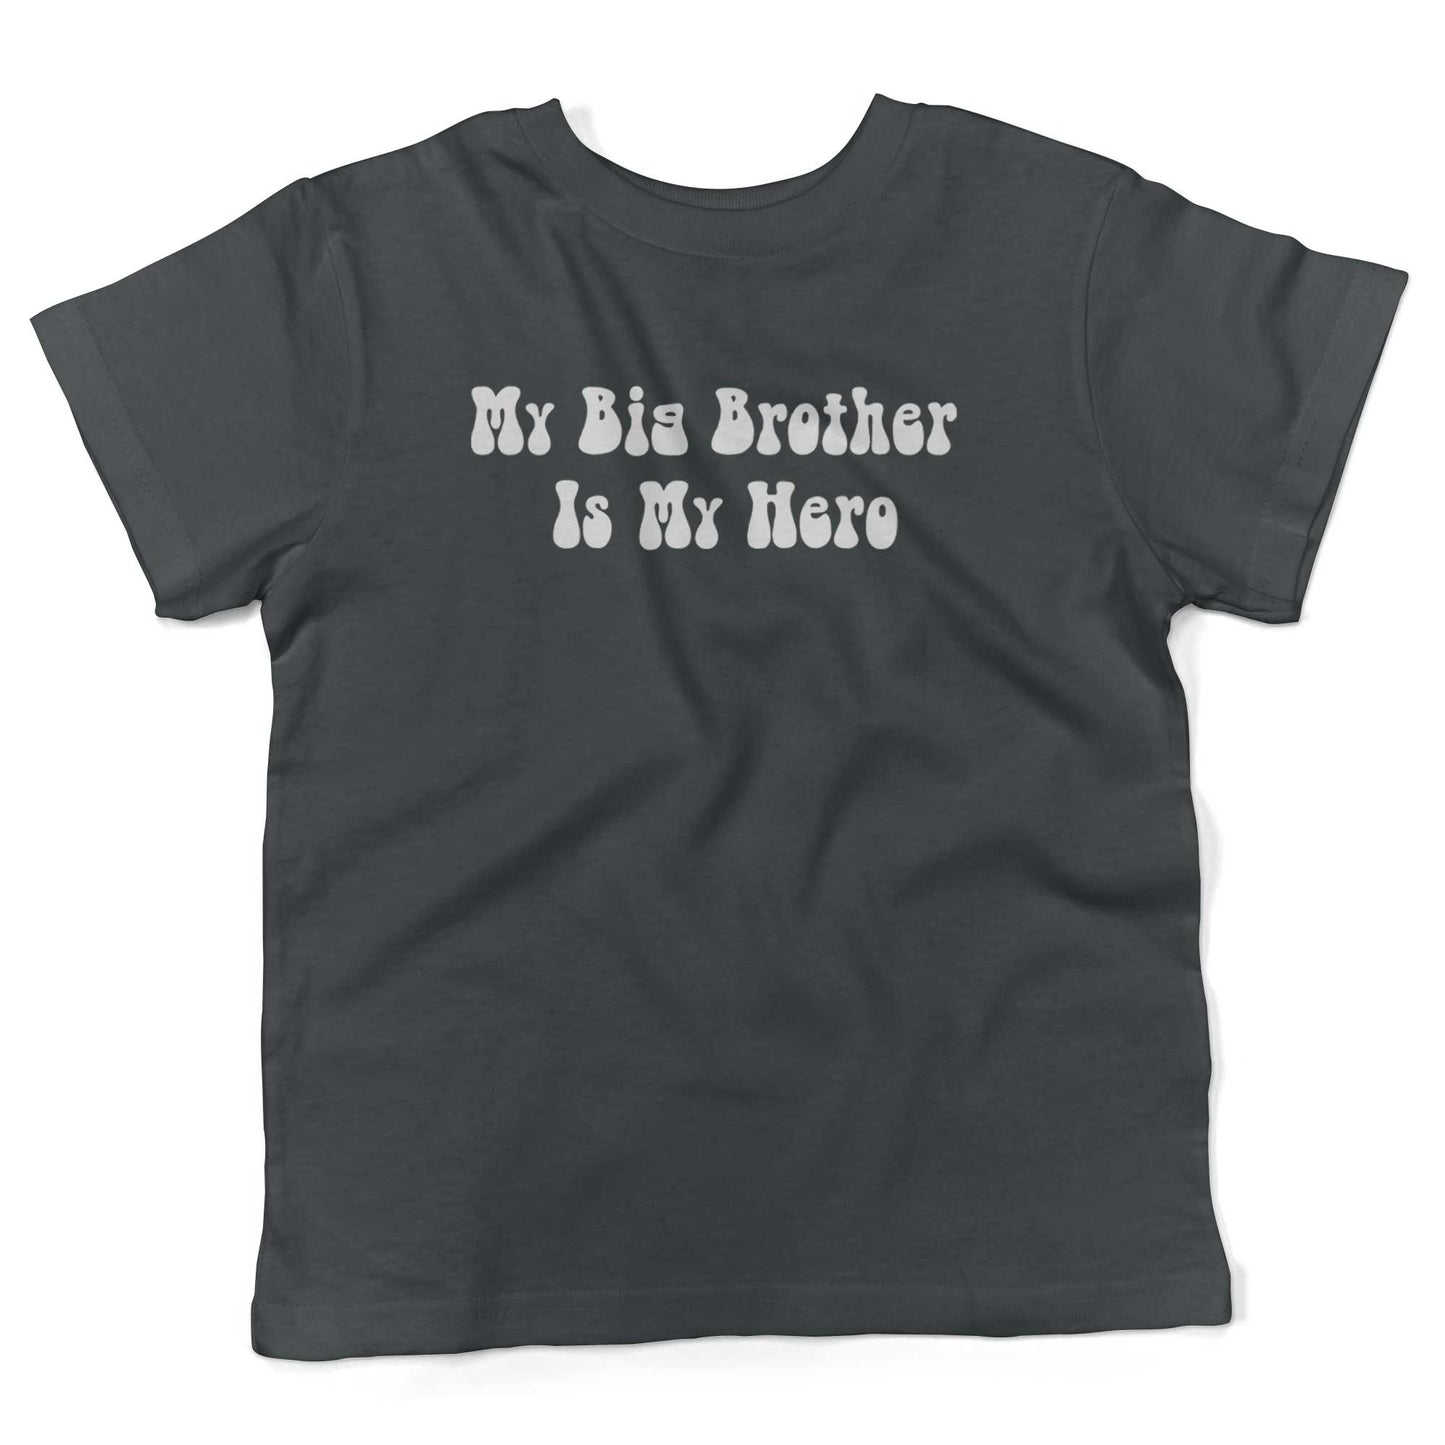 My Big Brother Is My Hero Toddler Shirt-Asphalt-2T